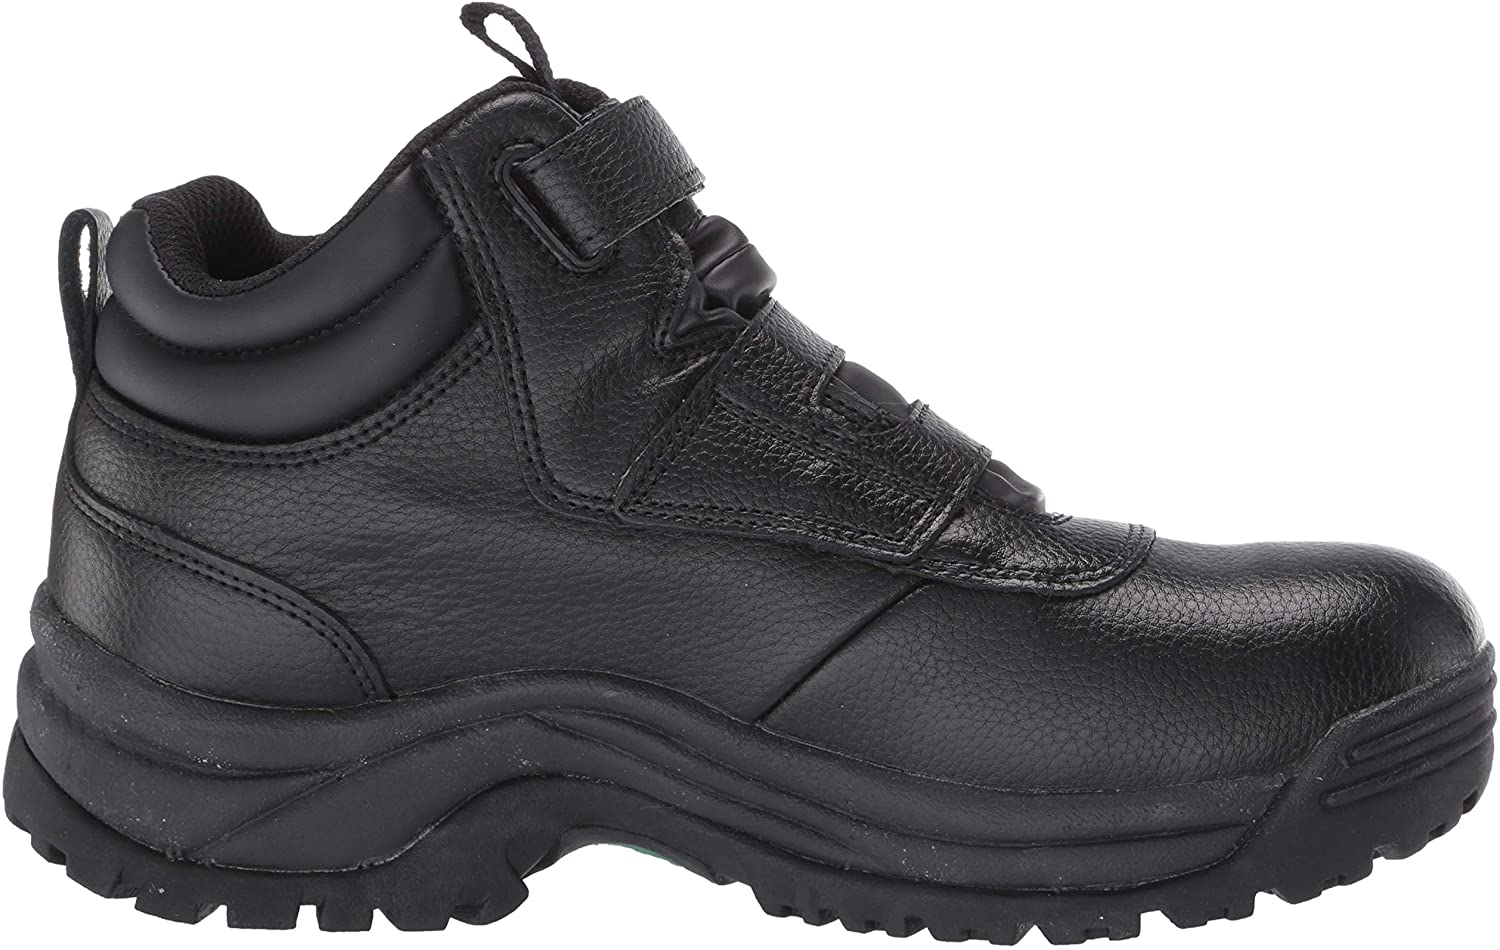 Propet Men's Cliff Walker Strap Boot, Black, Size 11.0 r7h4 ...